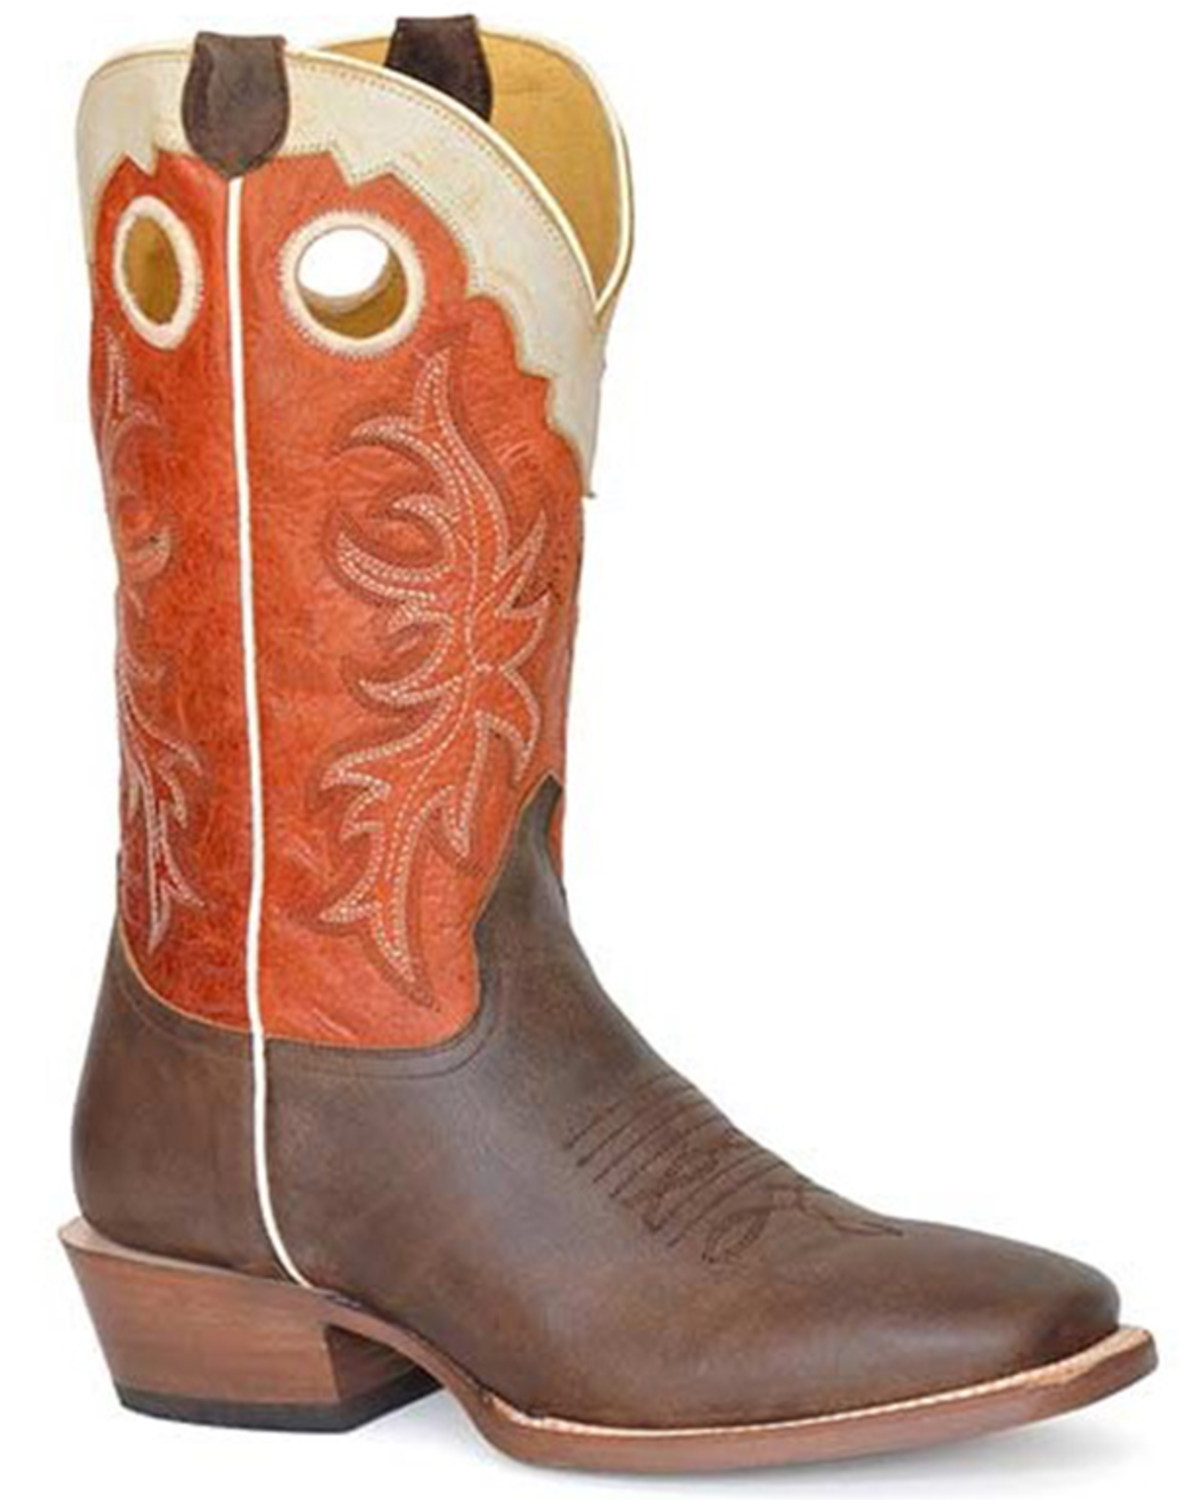 Roper Men's Ride Em' Cowboy Western Boots